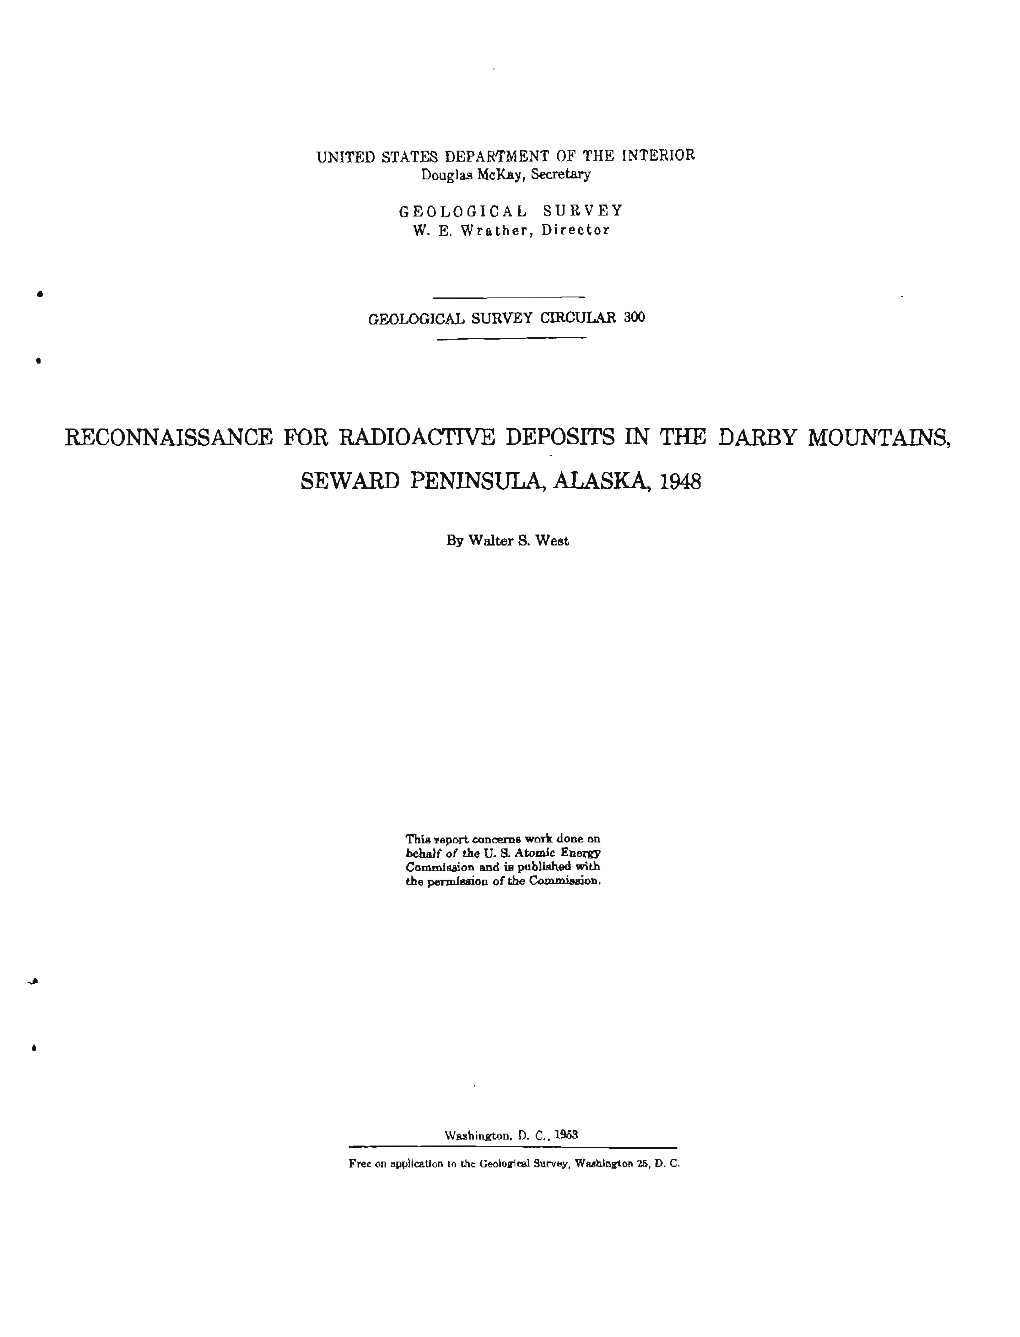 Reconnaissance for Radioactive Deposits in the Darby Mountains, Seward Peninsula, Alaska, 1948